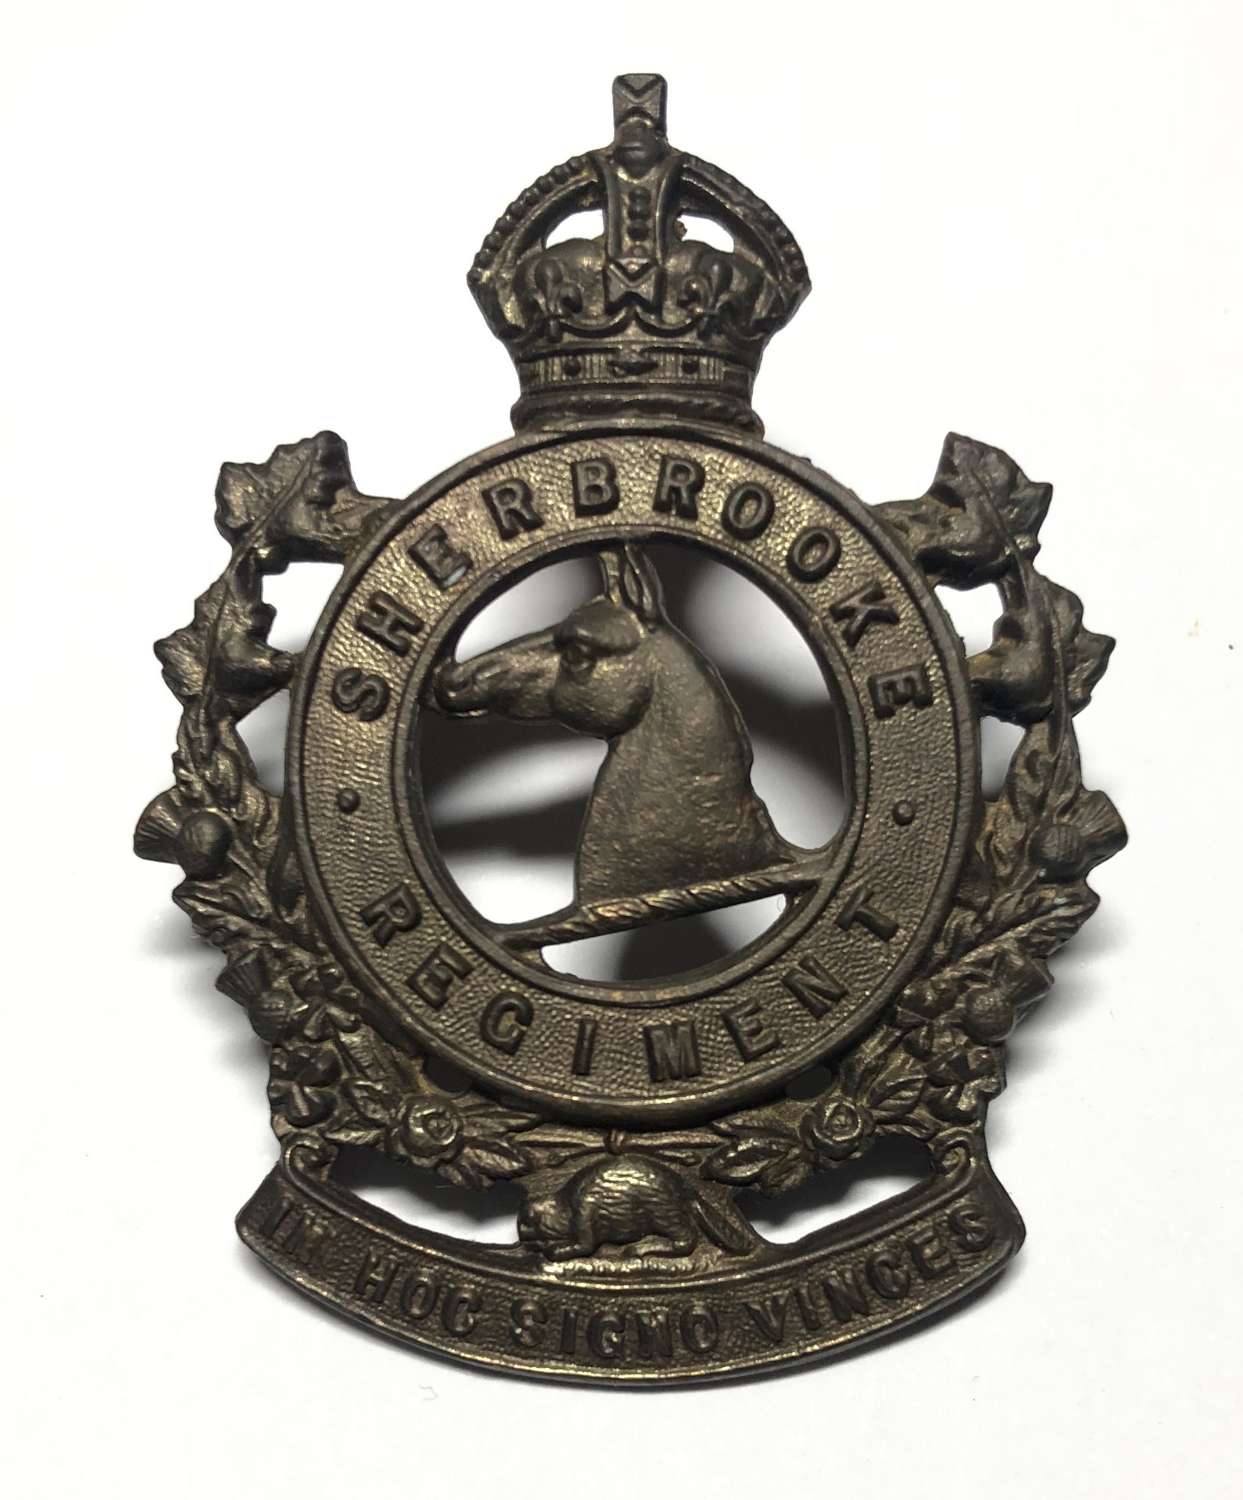 Canada. The Sherbrooke Regiment post 1928 WW2 cap badge